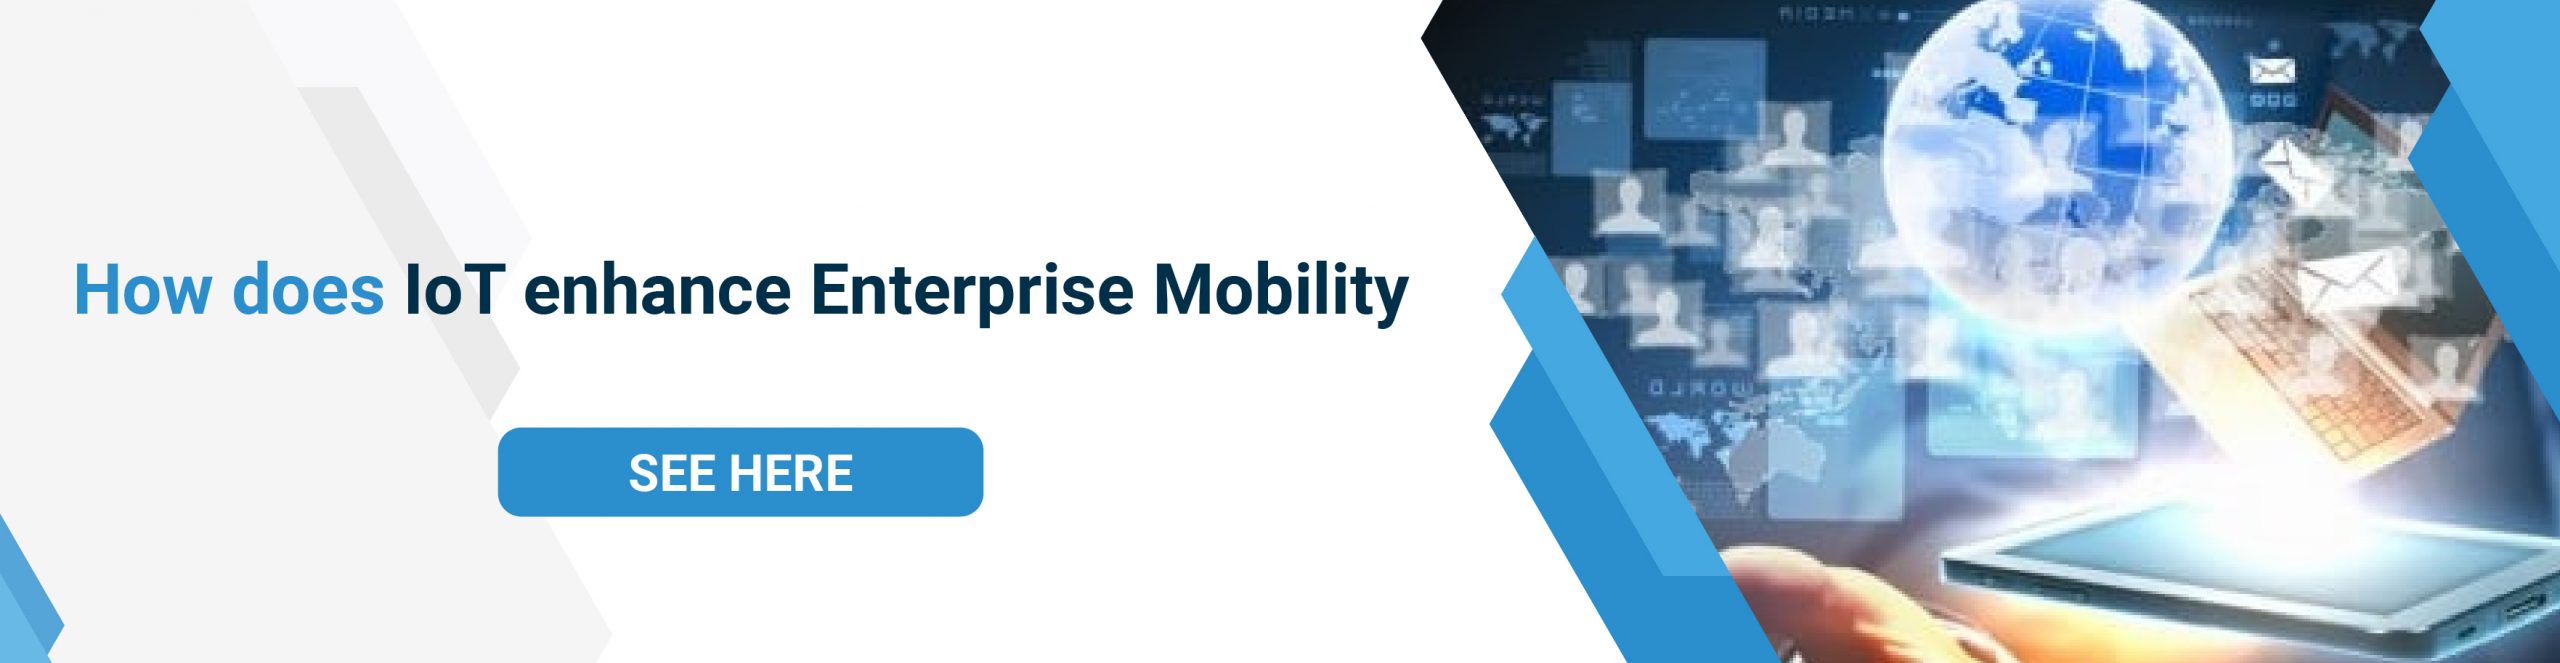 How does IoT enhance Enterprise Mobility